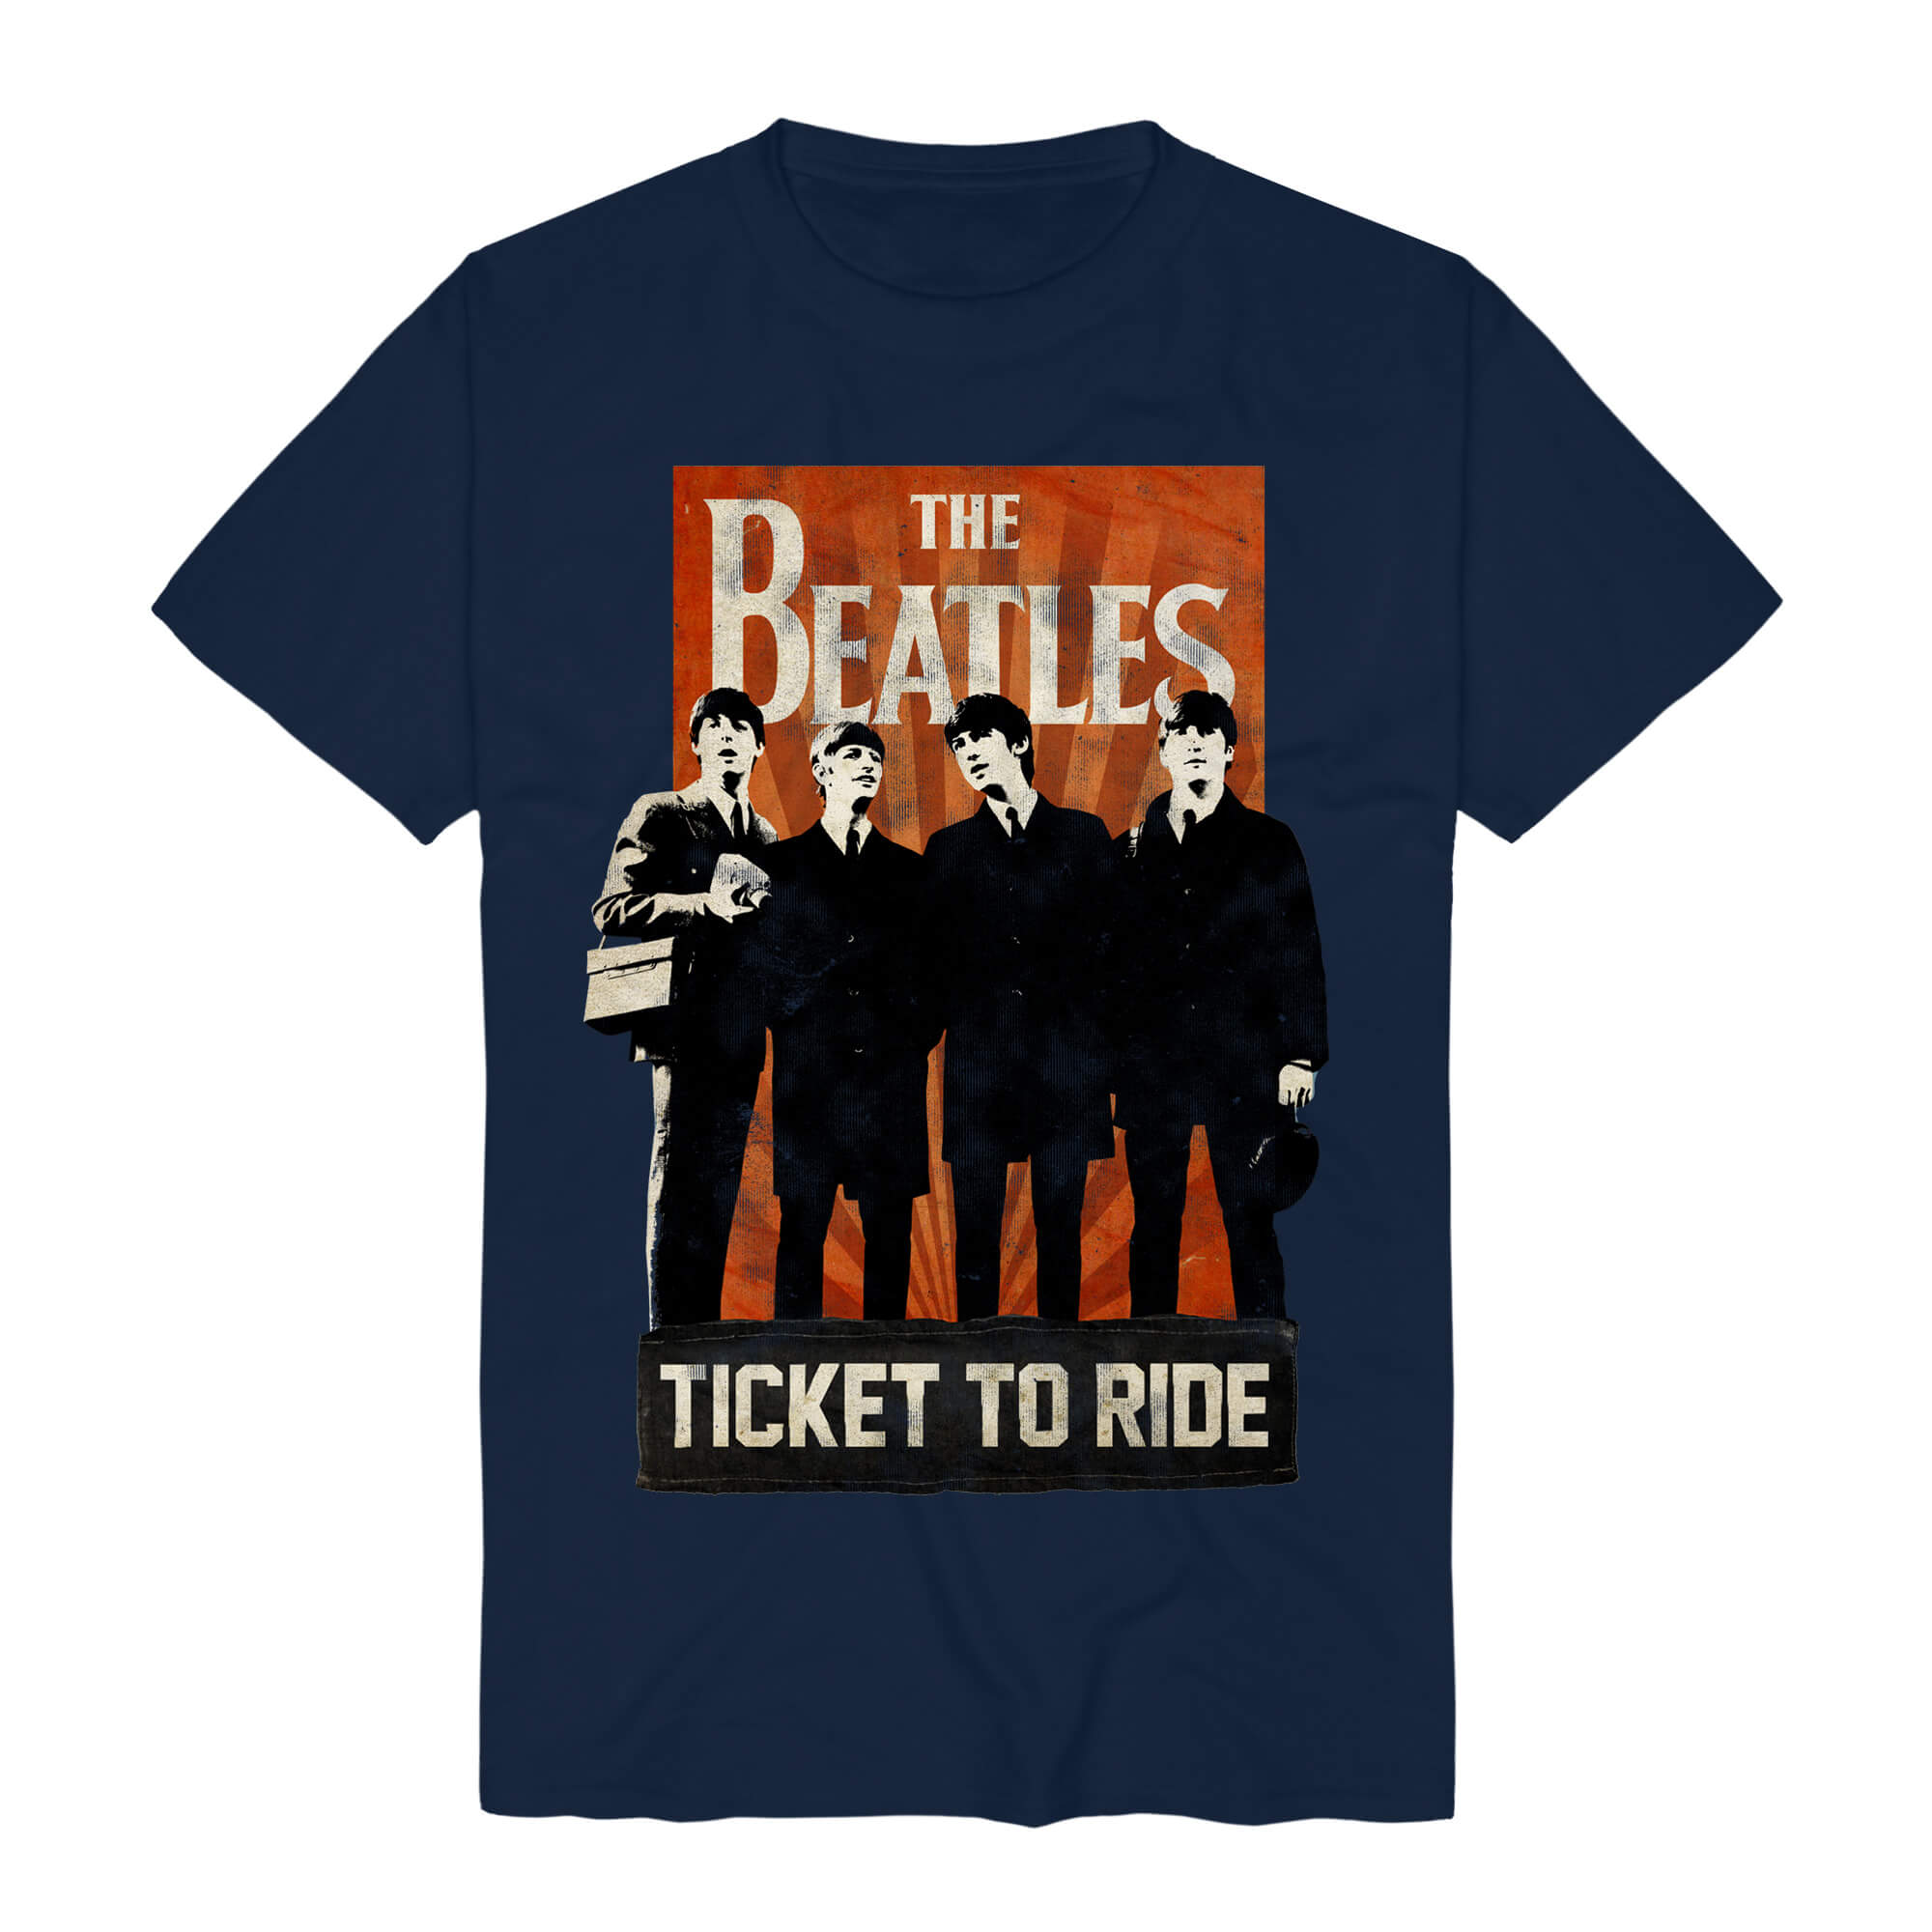 The Beatles - Ticket To Ride (Medium)